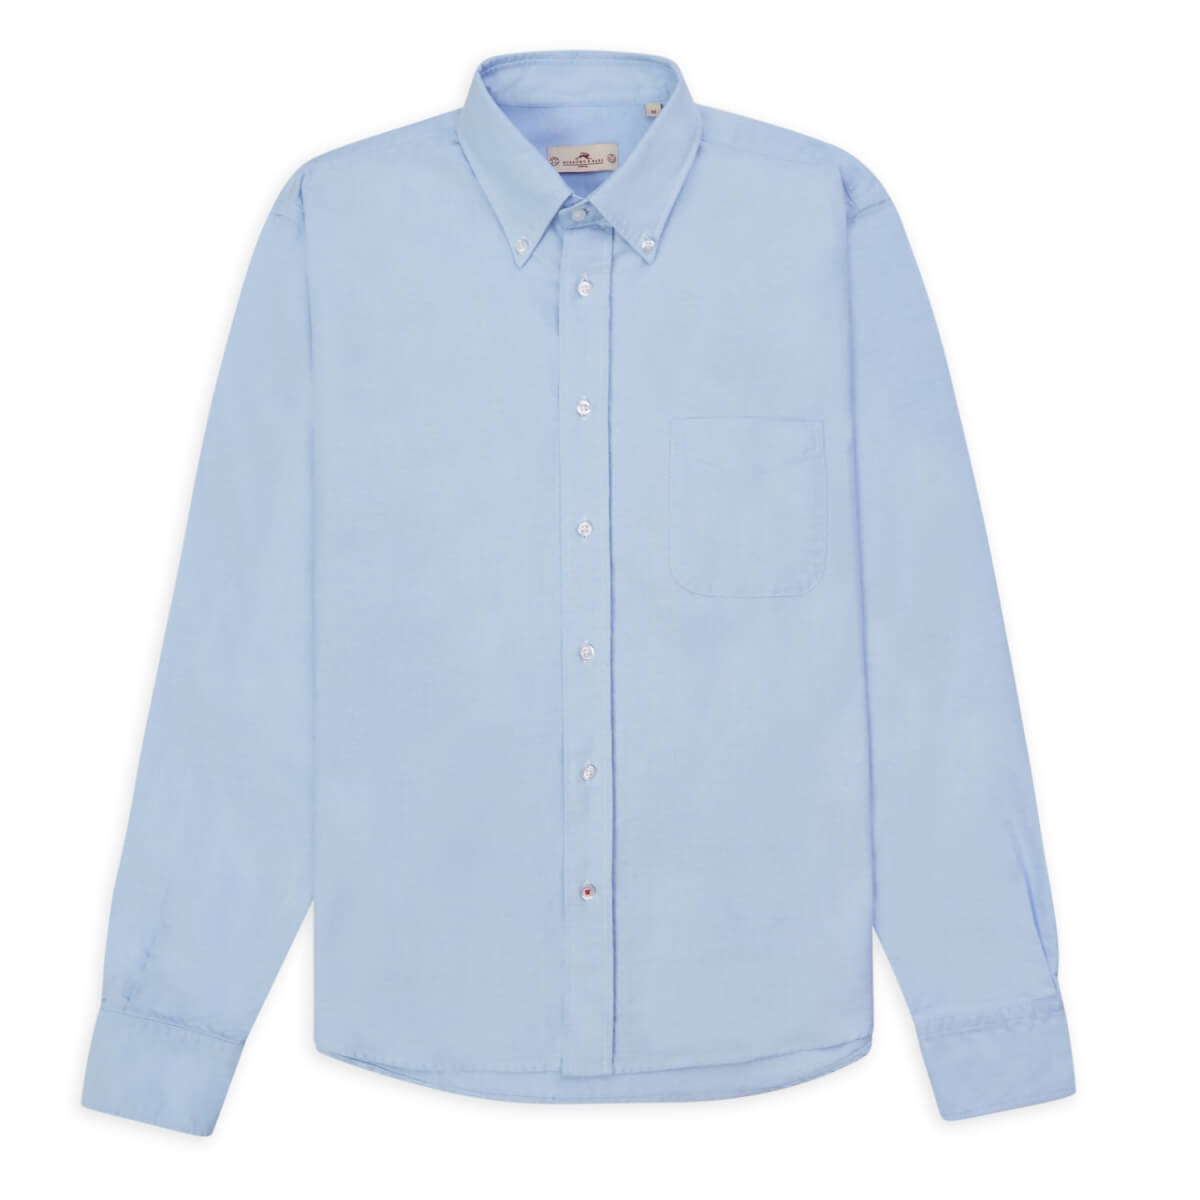 Men's Oxford Button-Down Shirt - Blue Small Burrows & Hare